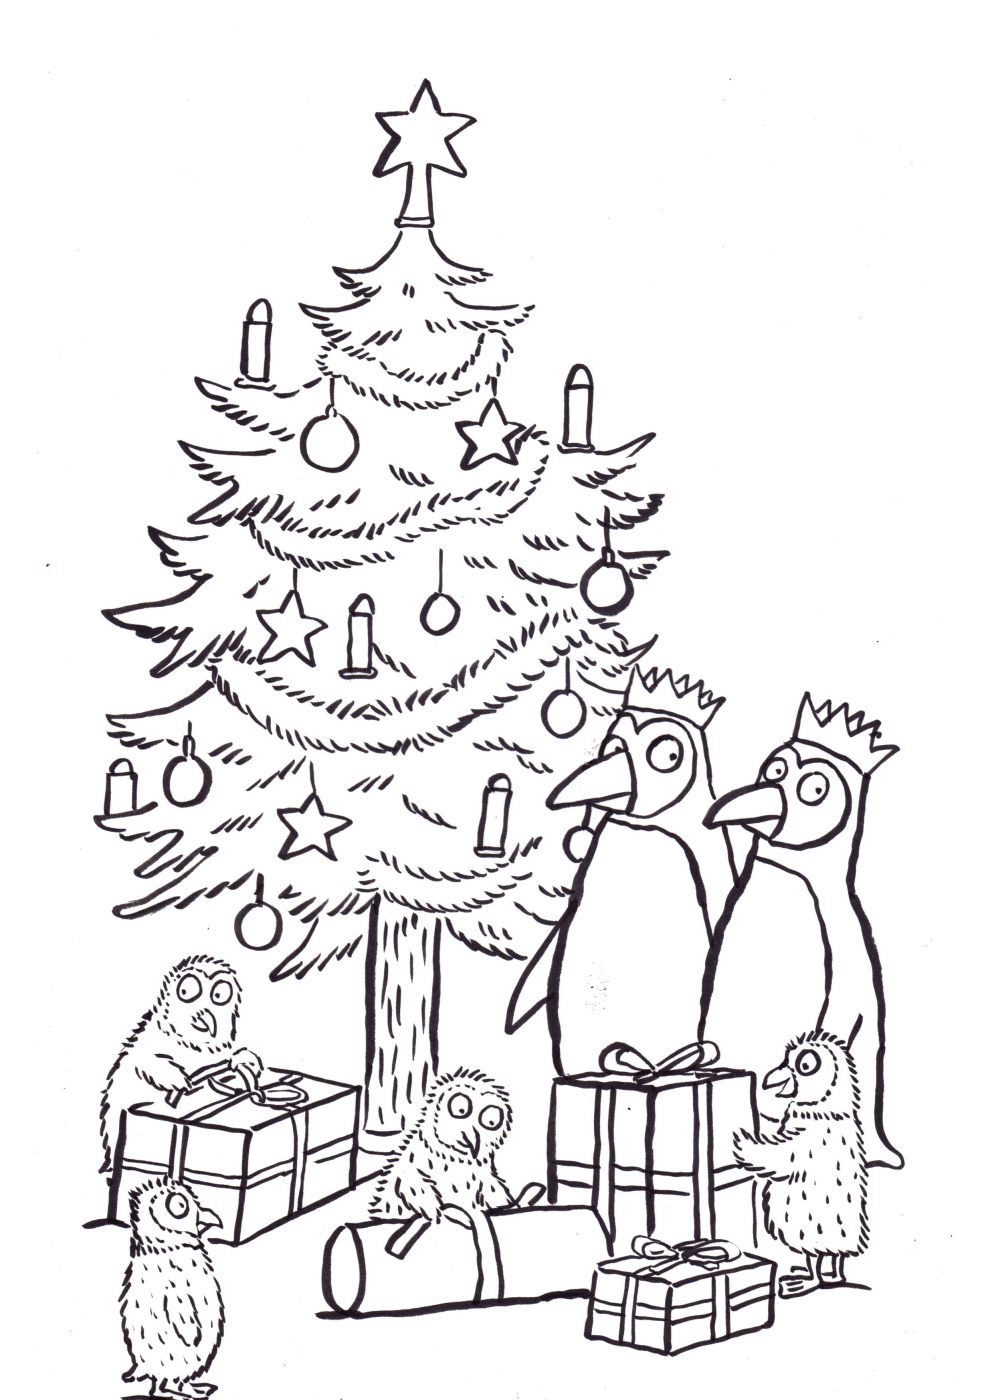 Christmas tree and penguins illustration